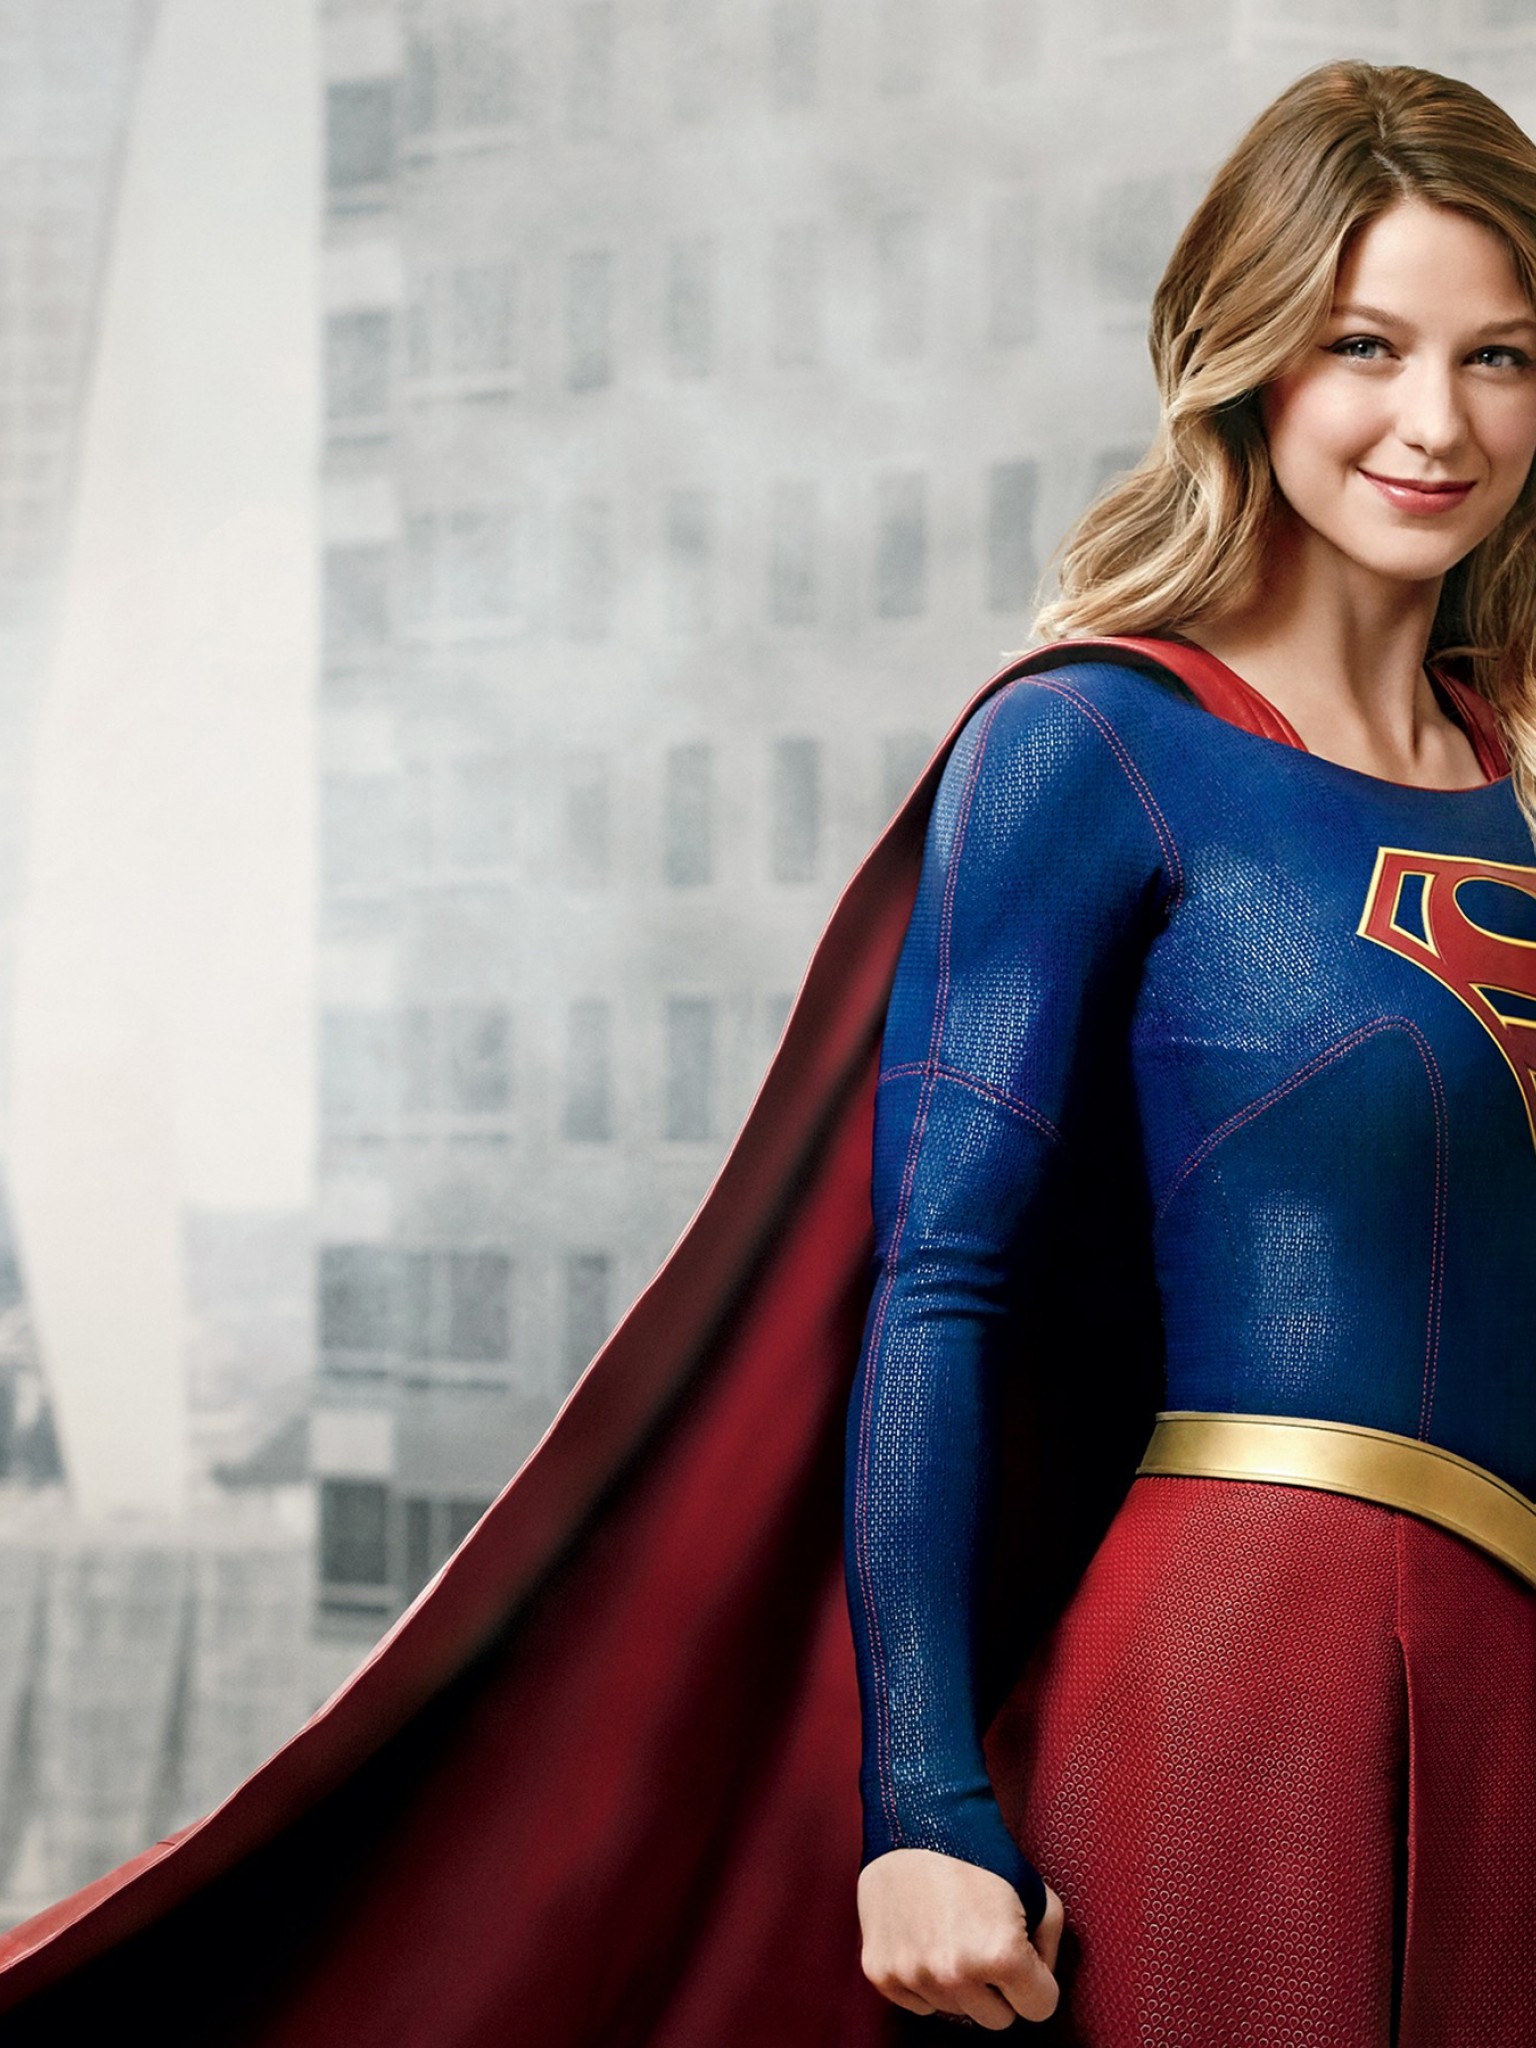 Melissa Benoist Supergirl Hd Wallpaper for Desktop and Mobiles - Retina iPa...